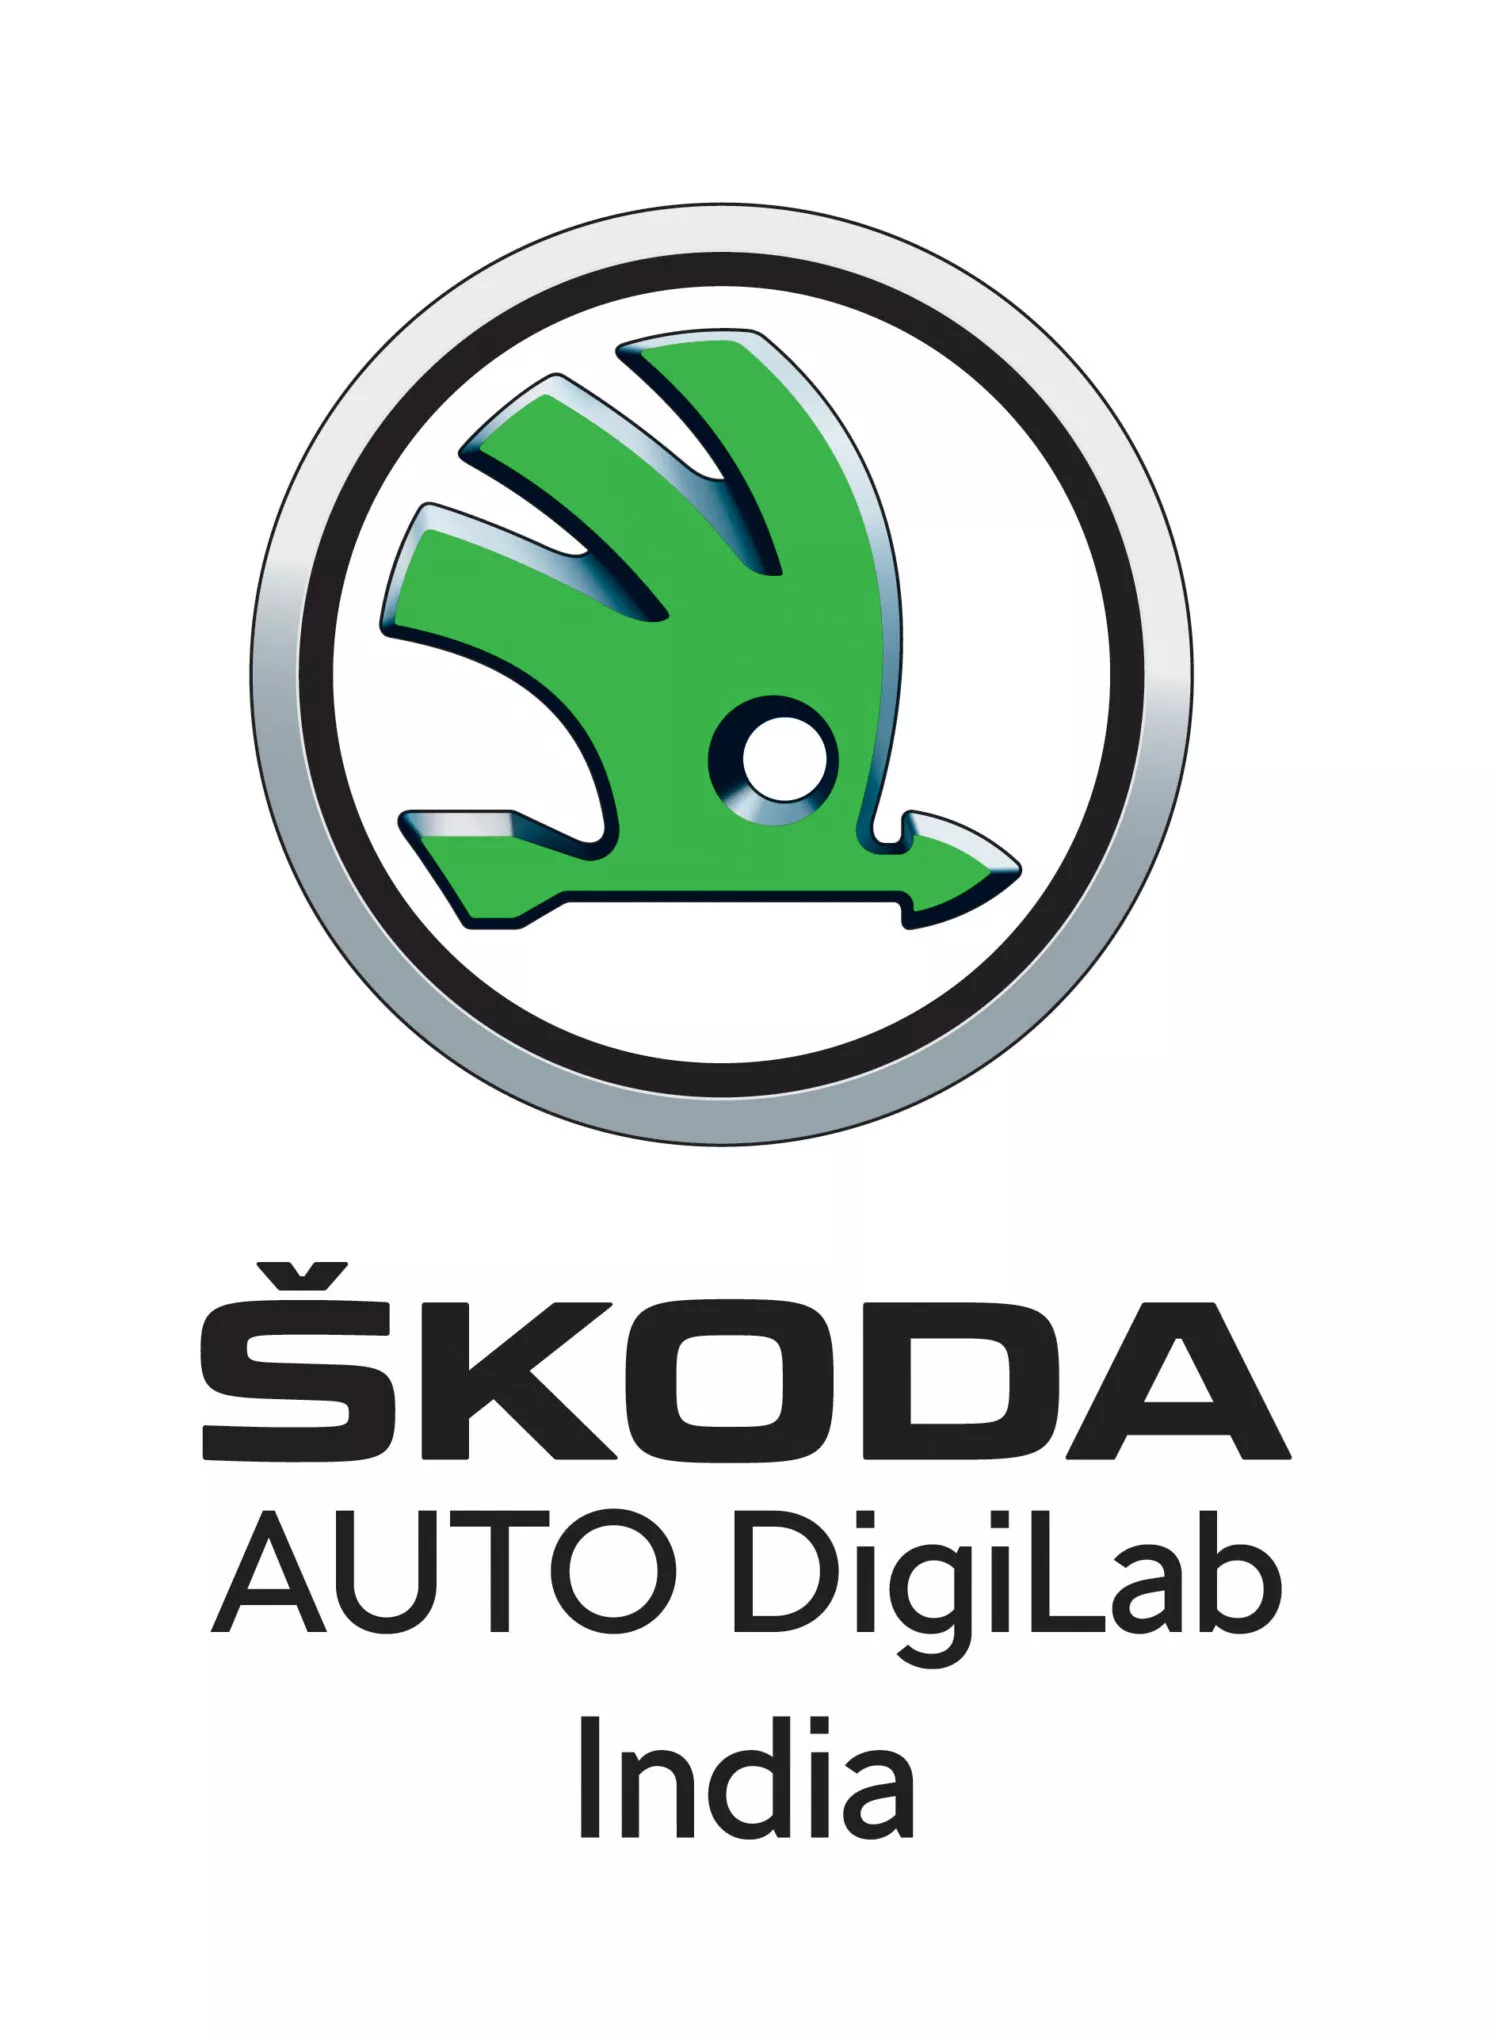 200131-skoda-auto-digilab-india-logo-jpg